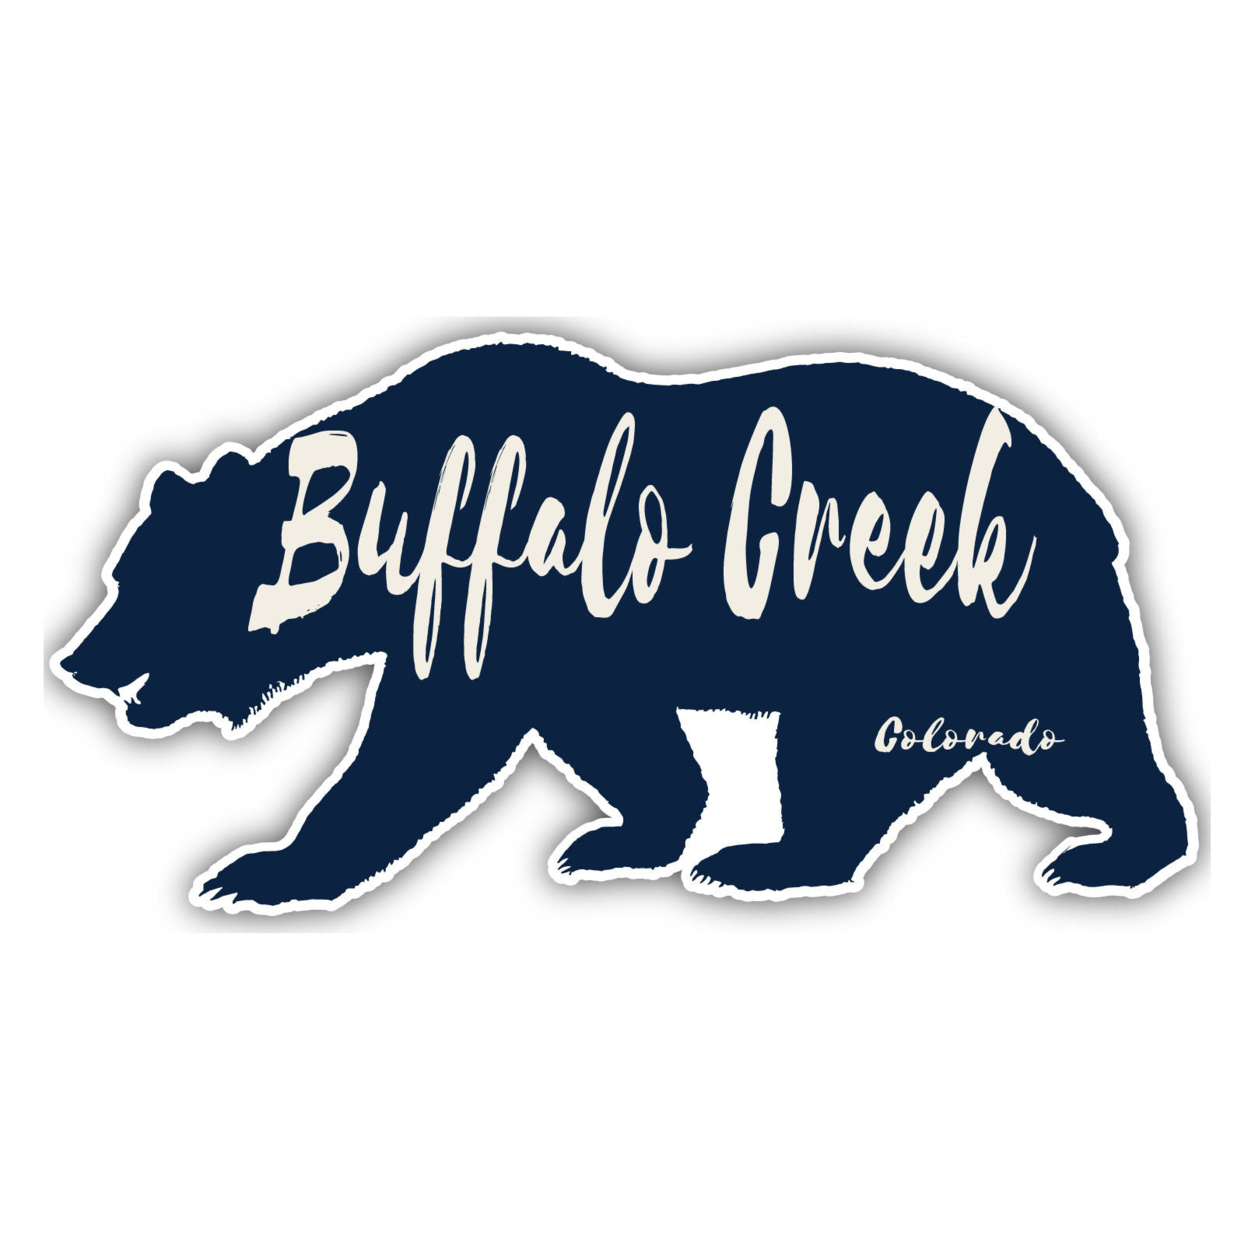 Buffalo Creek Colorado Souvenir Decorative Stickers (Choose Theme And Size) - 4-Pack, 2-Inch, Bear